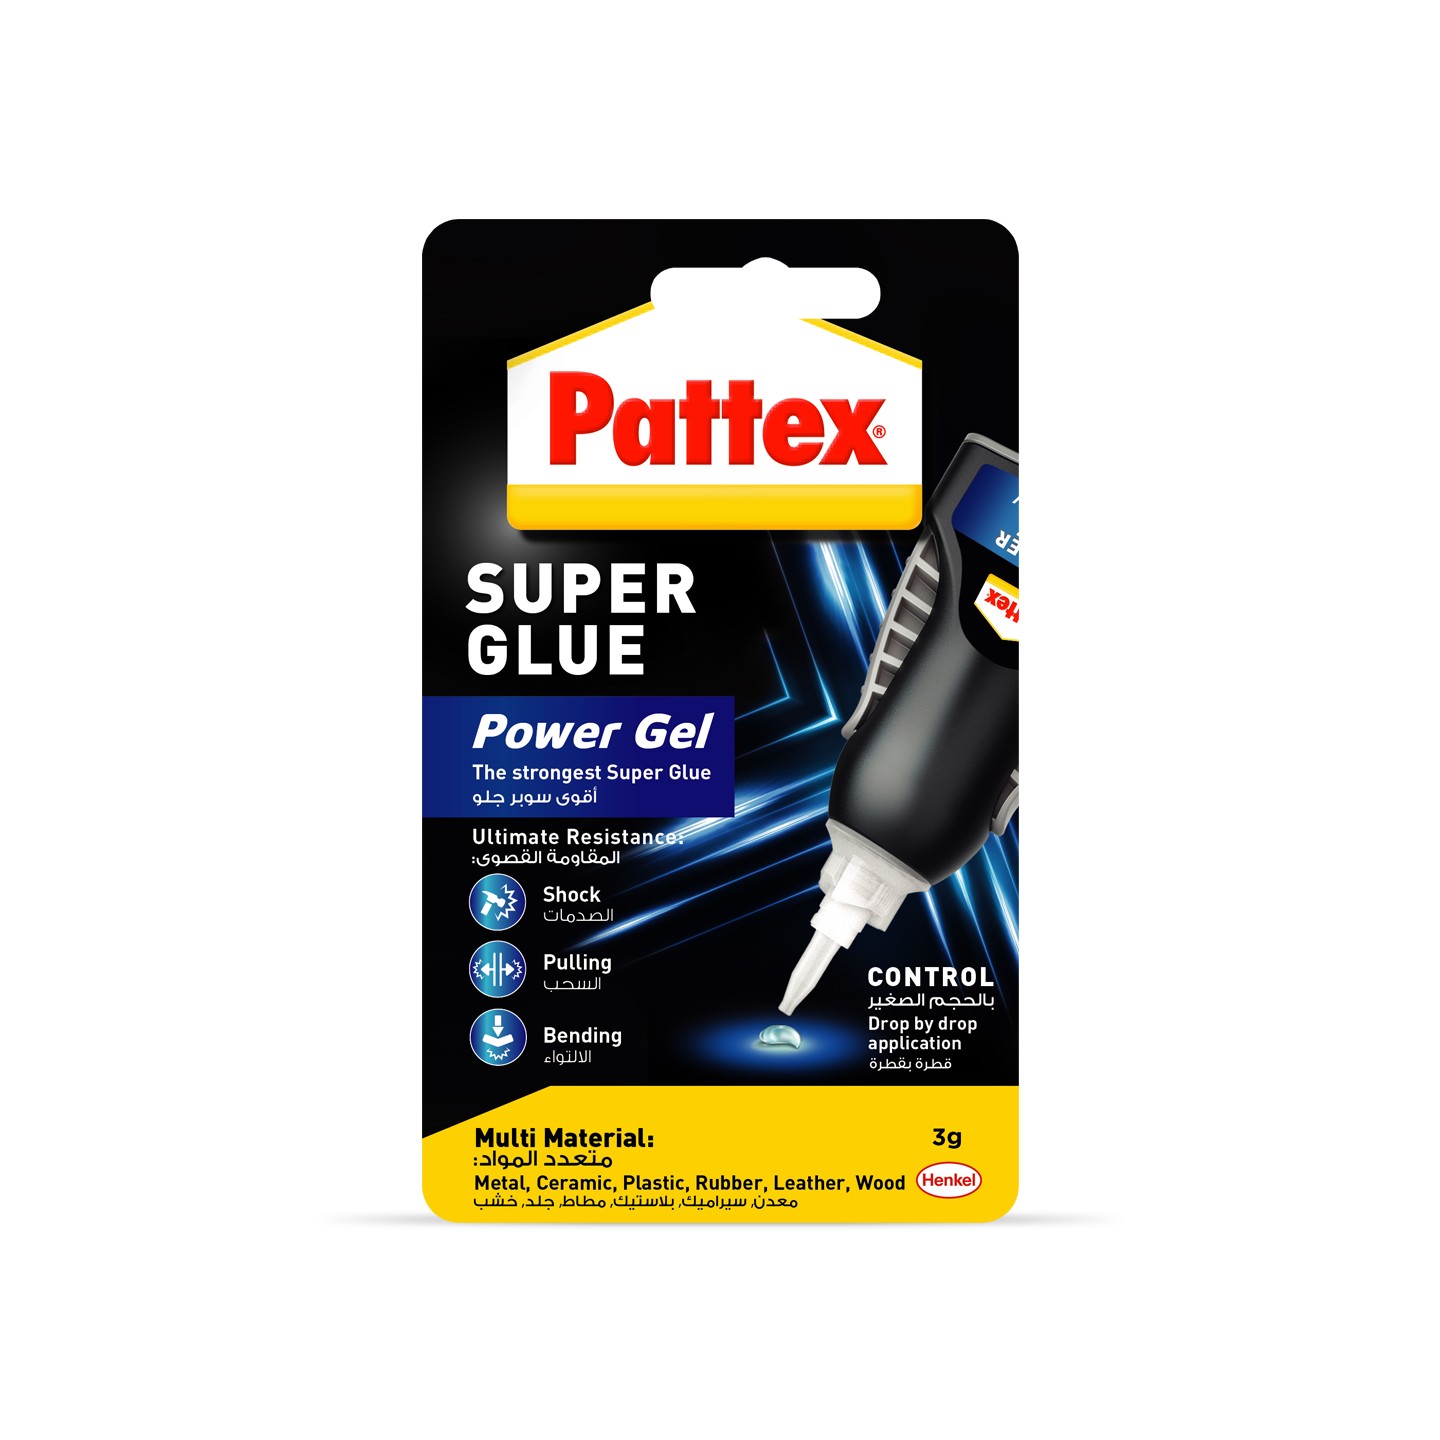 films te rechtvaardigen hongersnood Pattex Super Glue Gel Control - Pattex - Pattex